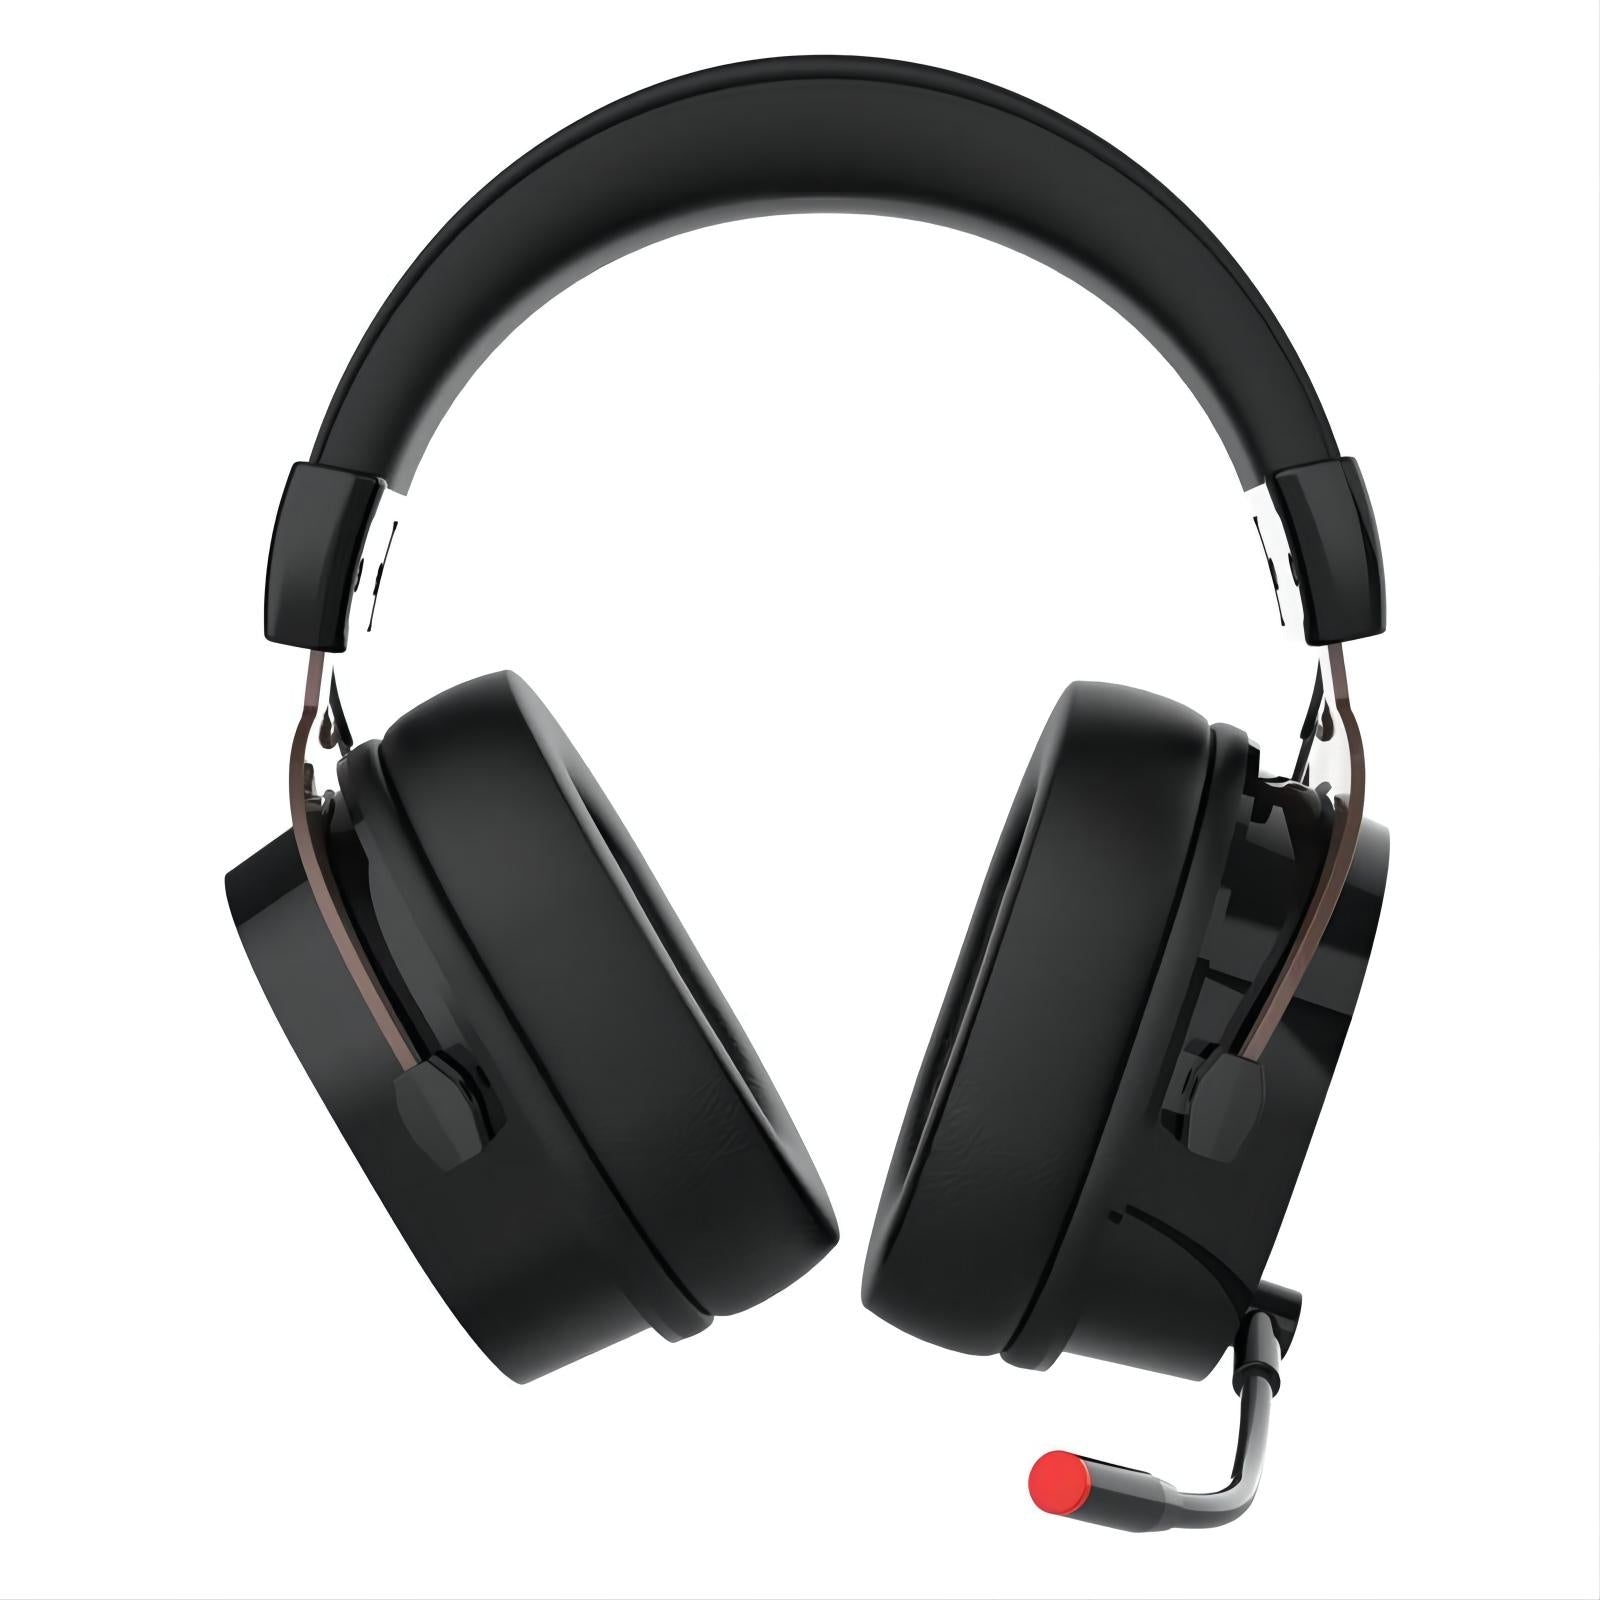 MonkeyTEC G1000 Wireless Bluetooth Gaming-Headset klappbares Mikrofon LED-Leuchte Kabelloses Gaming Konsole & PC